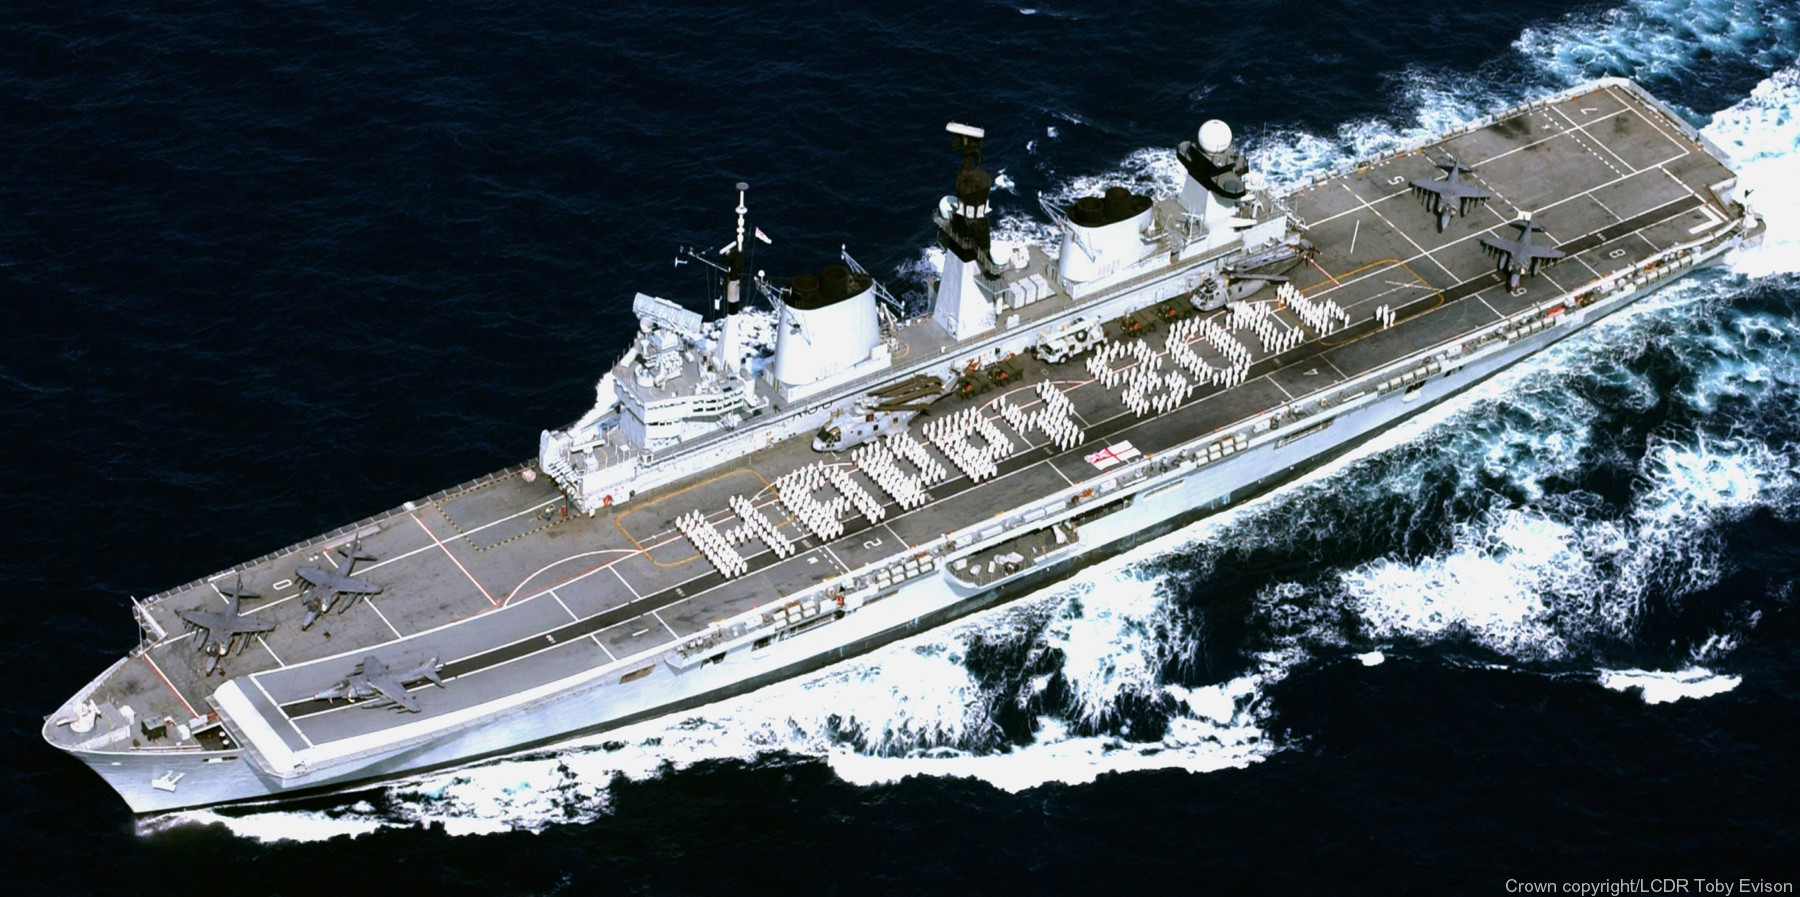 r06 hms illustrious invincible class aircraft carrier royal navy 54